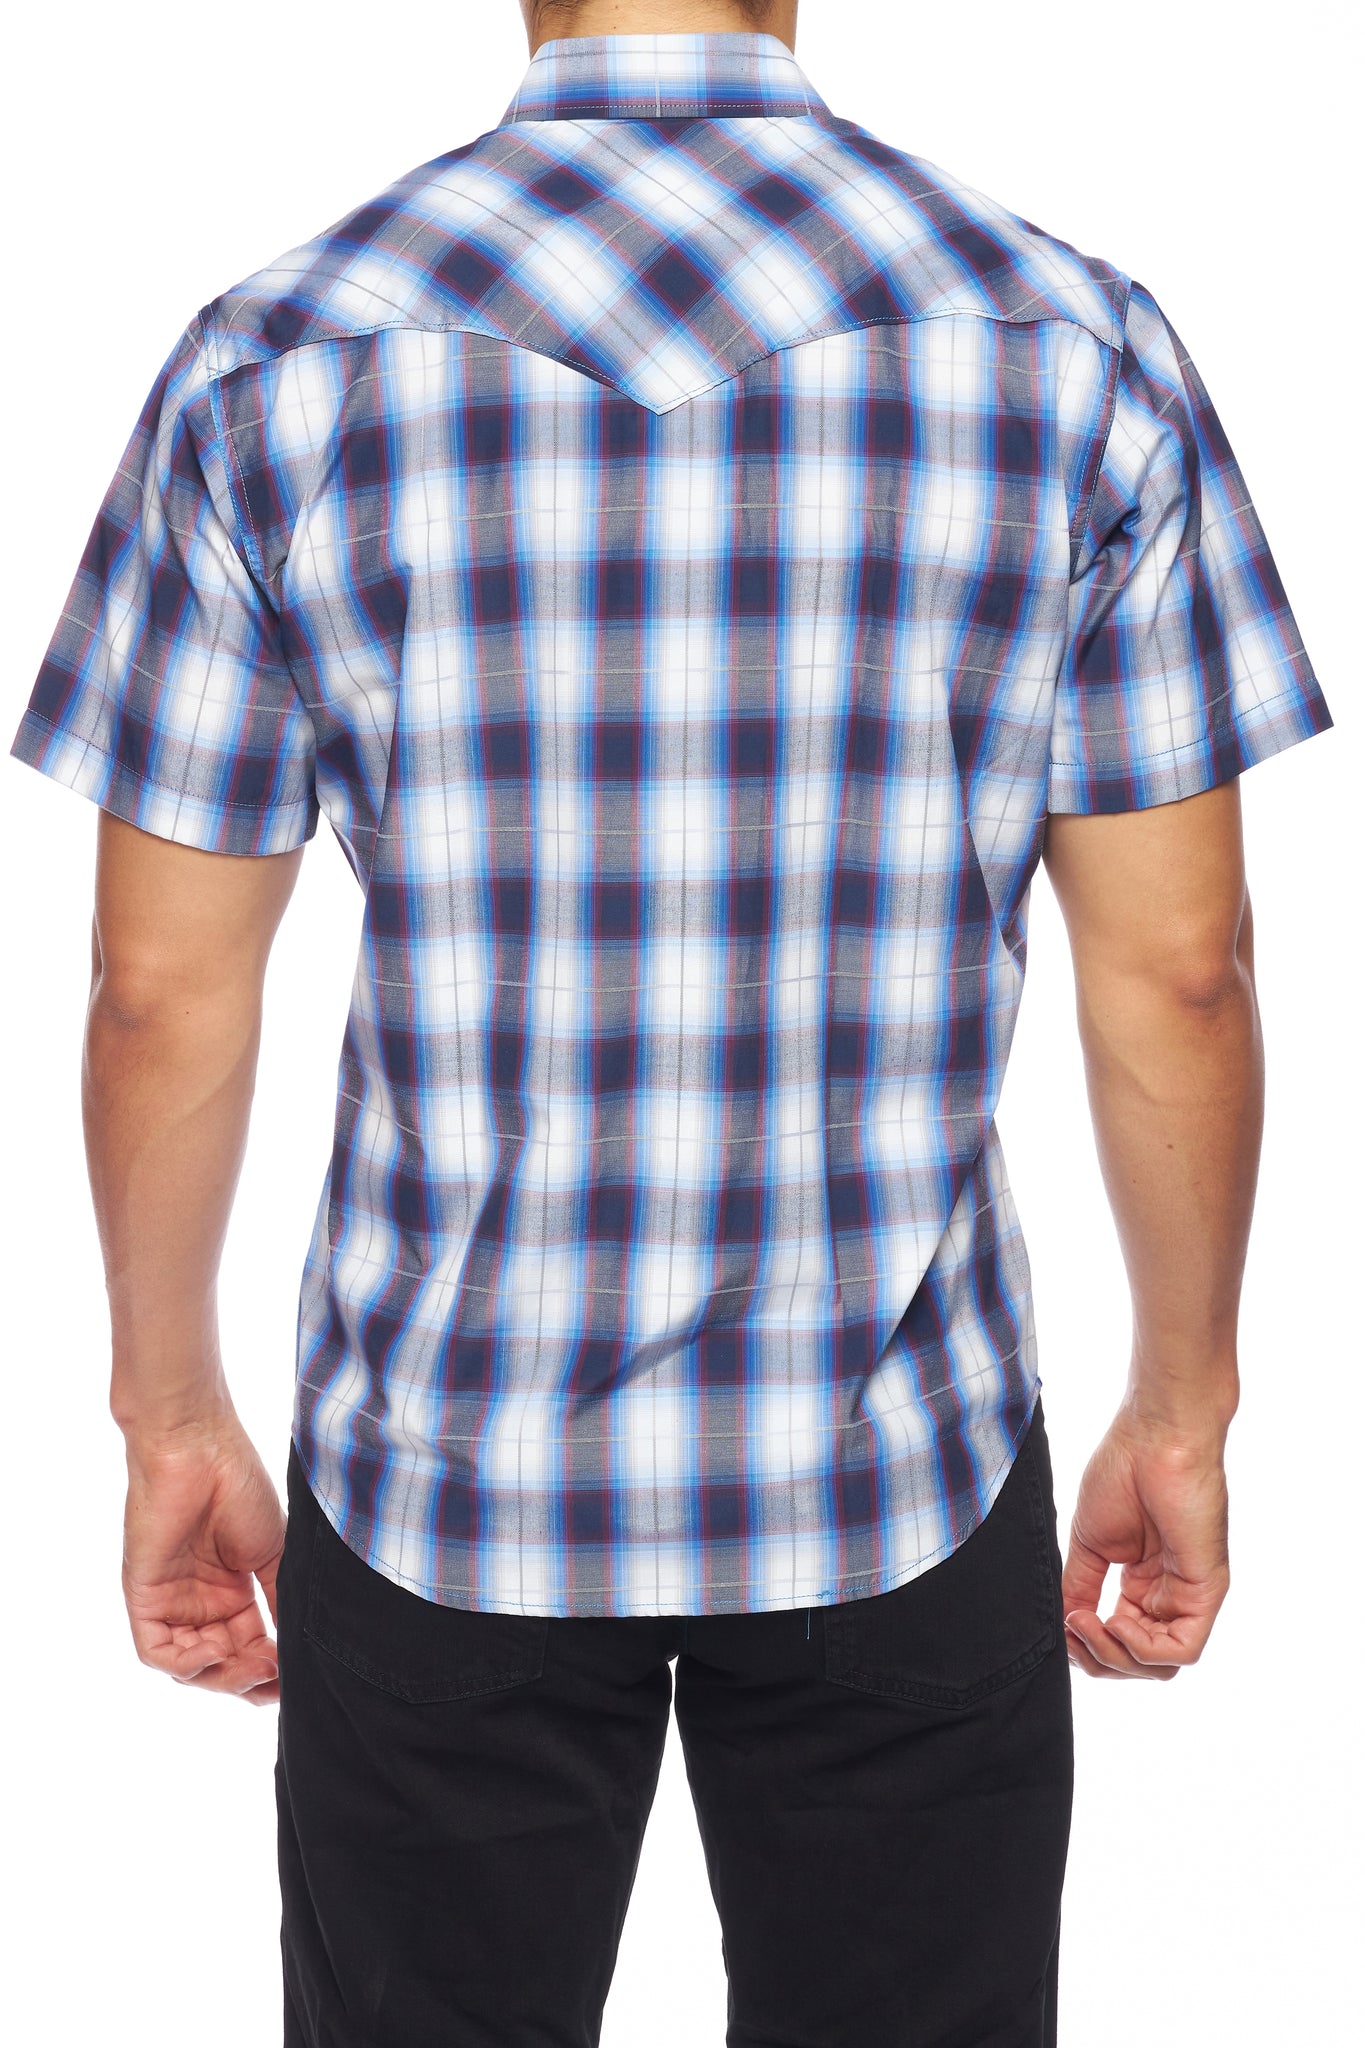 Camisas a cuadros occidentales de manga corta para hombre con botones a presión